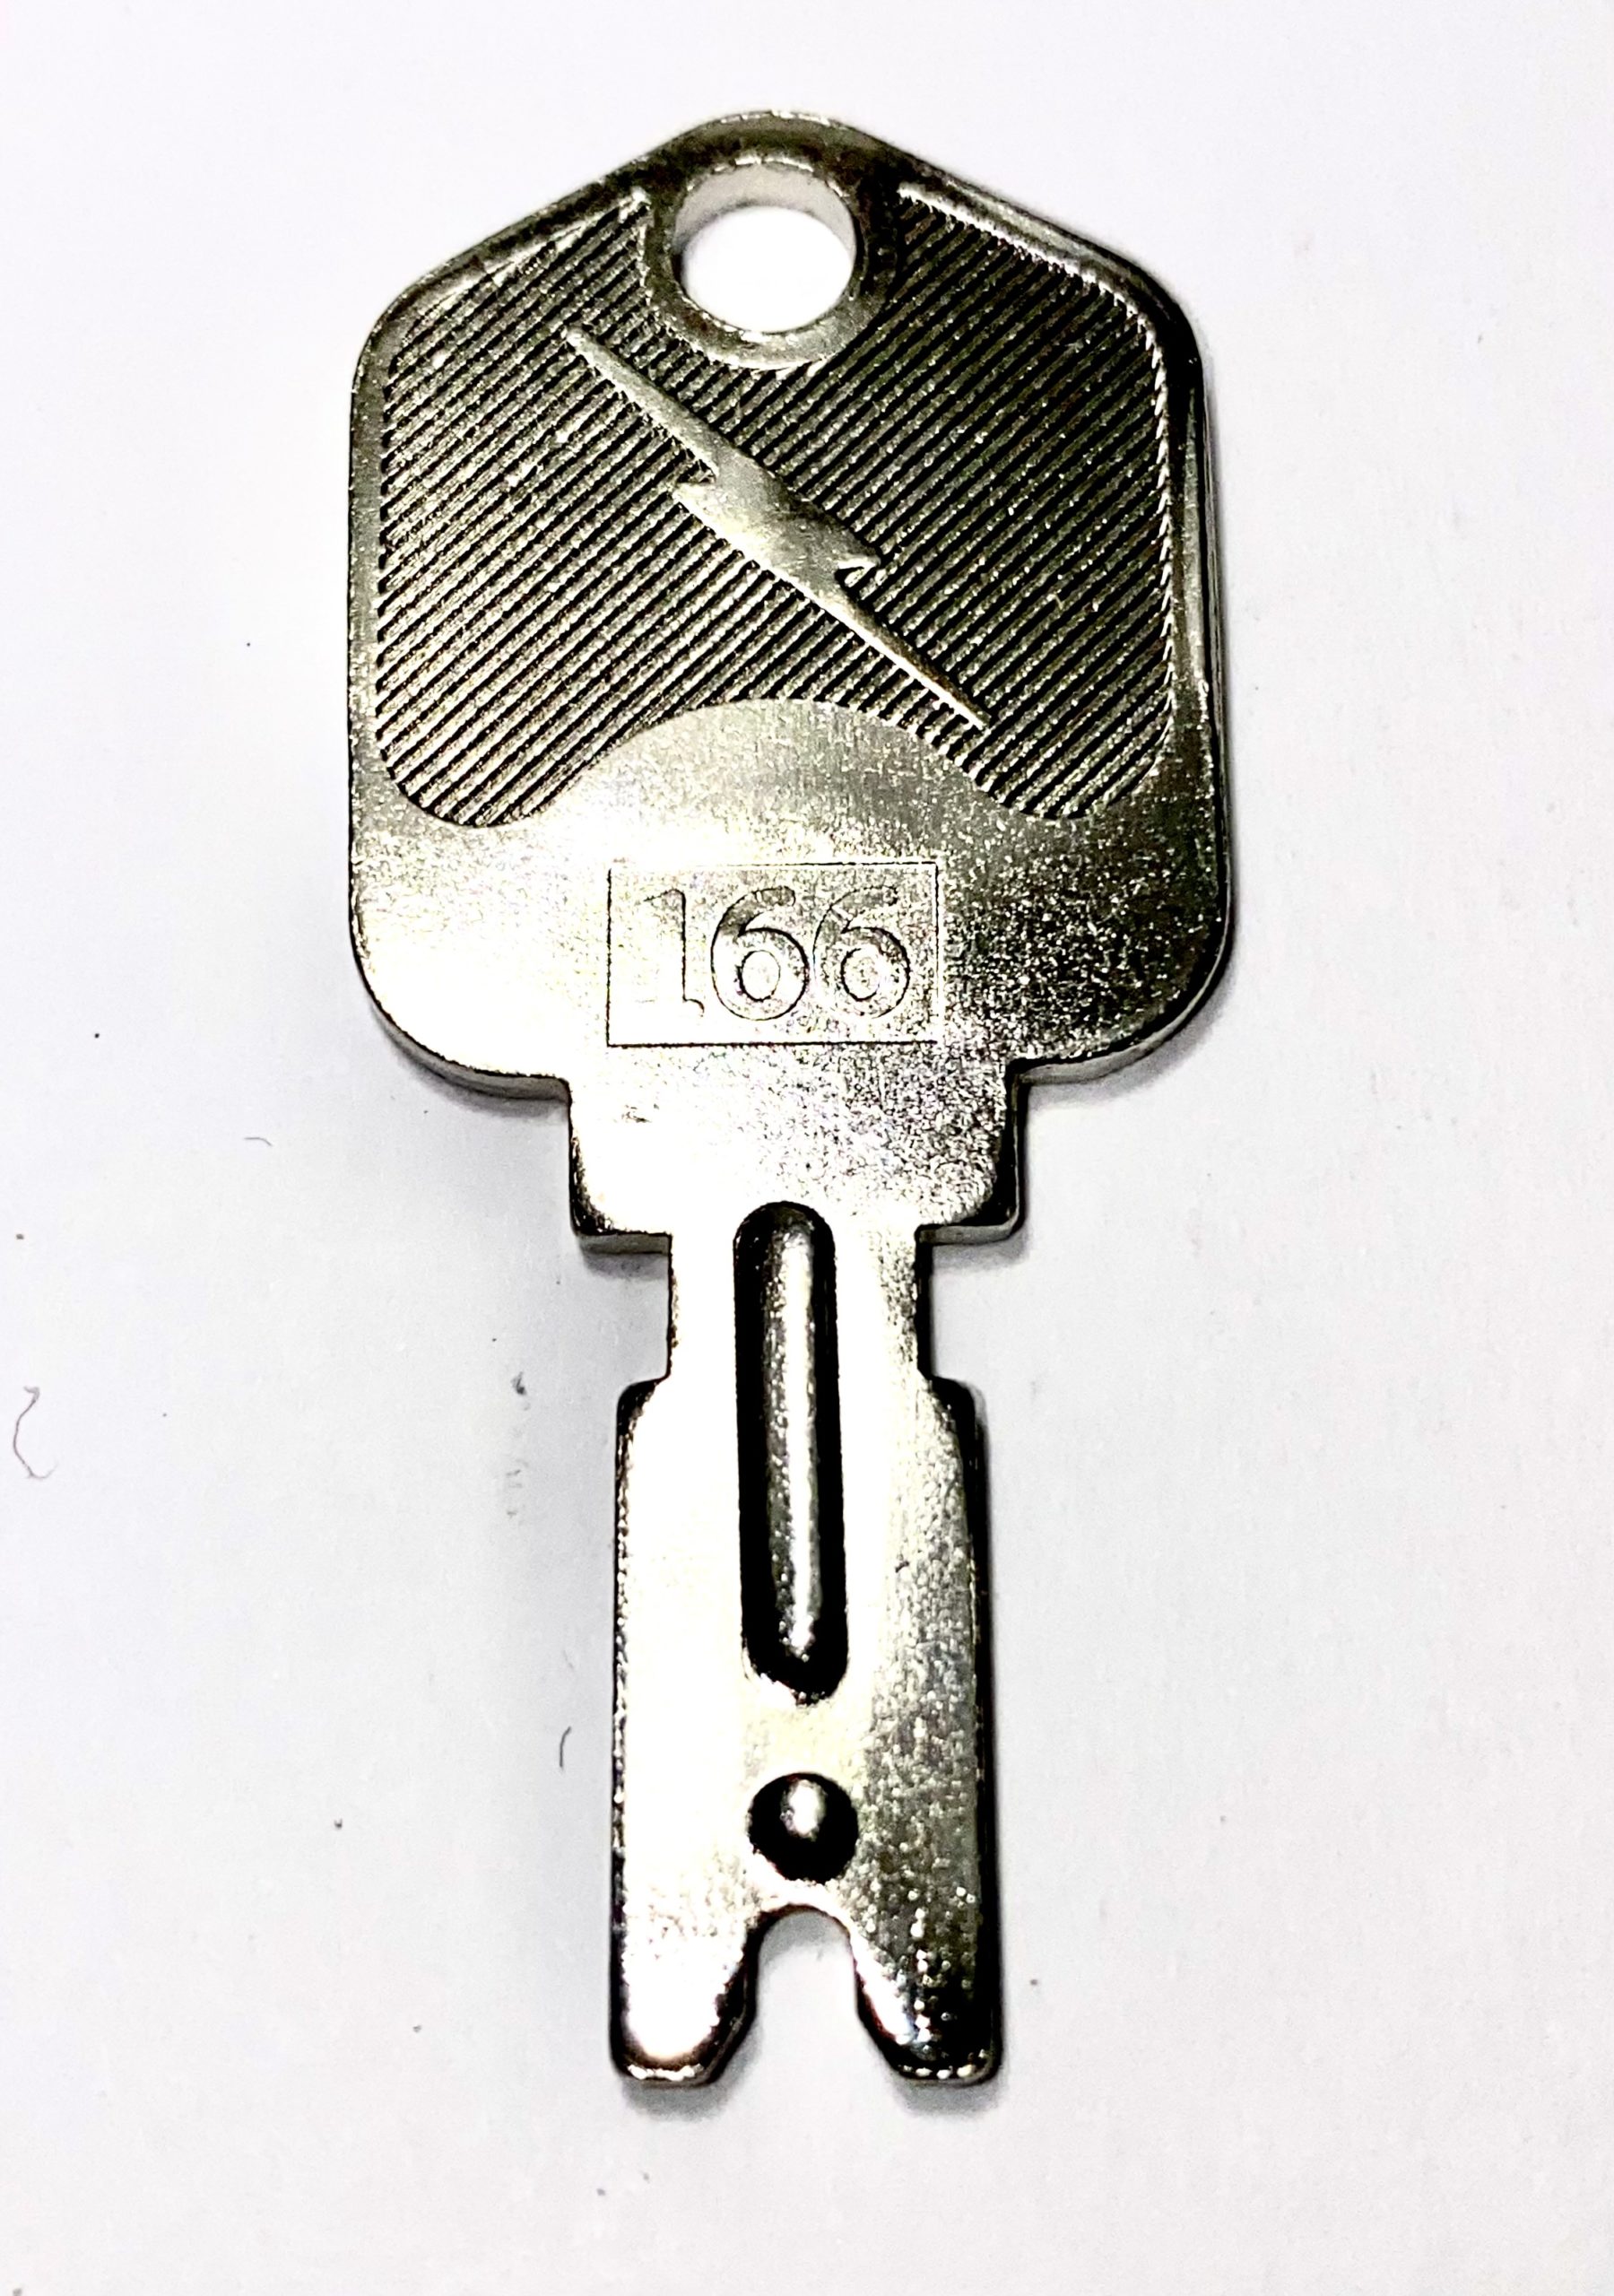 8 Keys Forklift Key Set for Yale Cat Clark Komatsu Toyota Doosan Nissan Hyster JCB